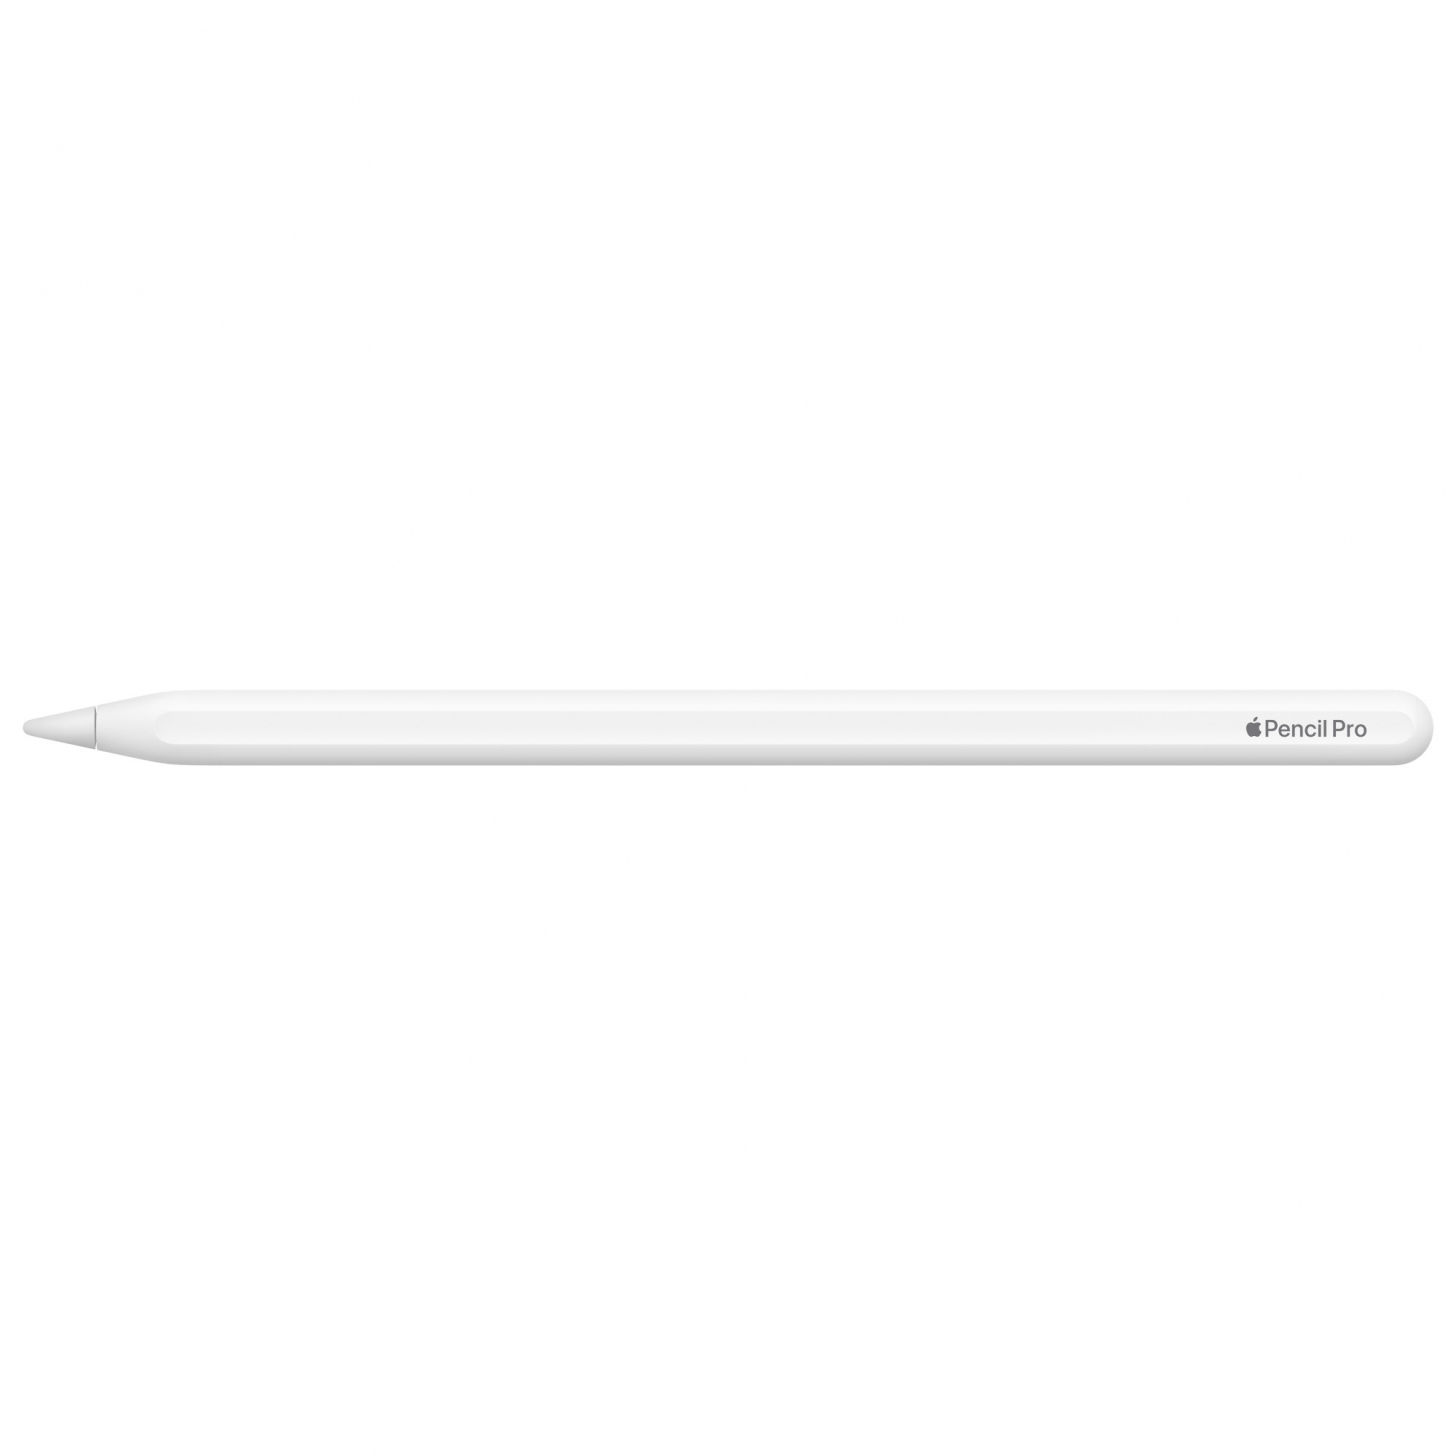 Der neuste Apple Pencil Pro